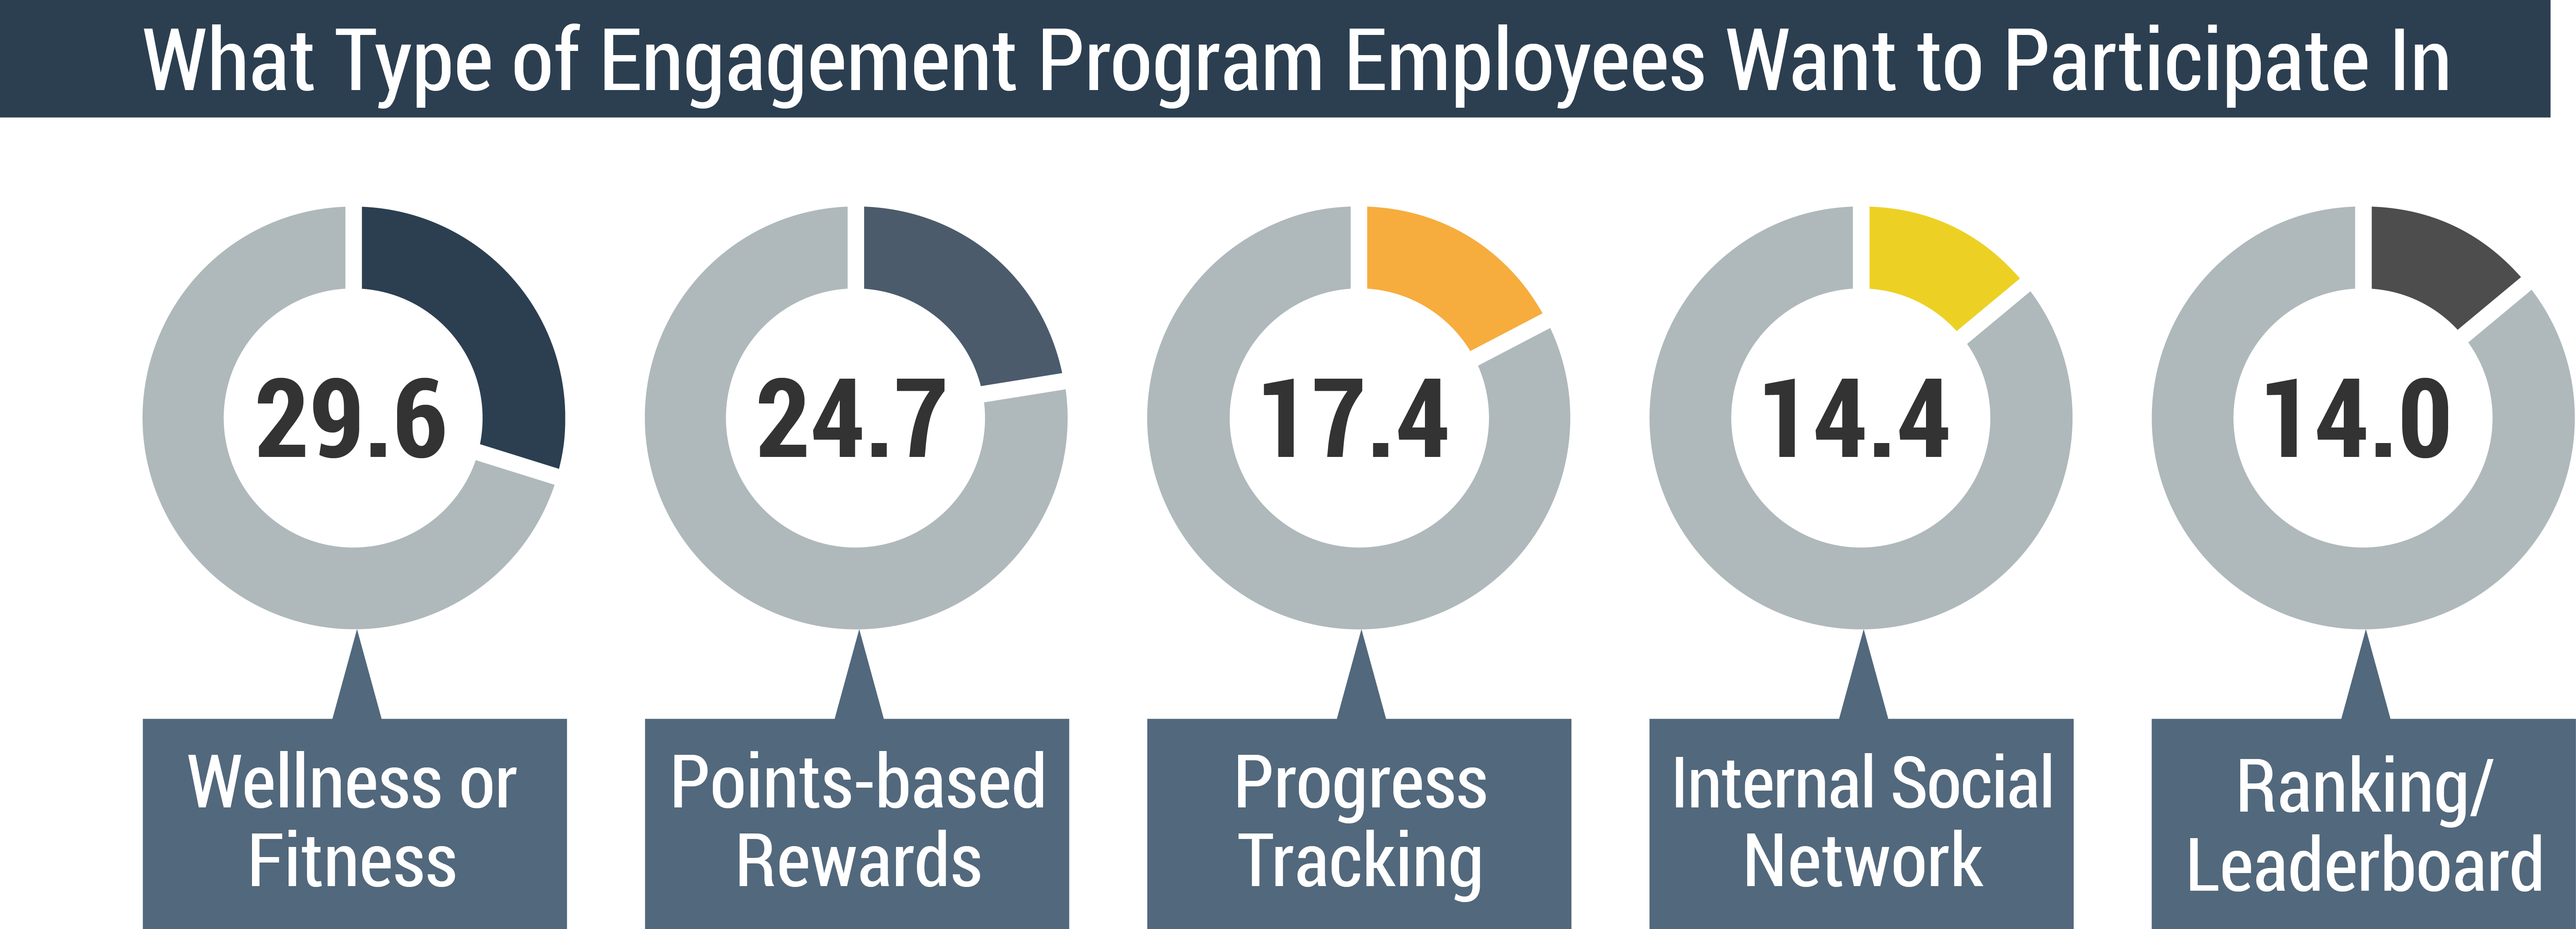 employee-engagement-chart9